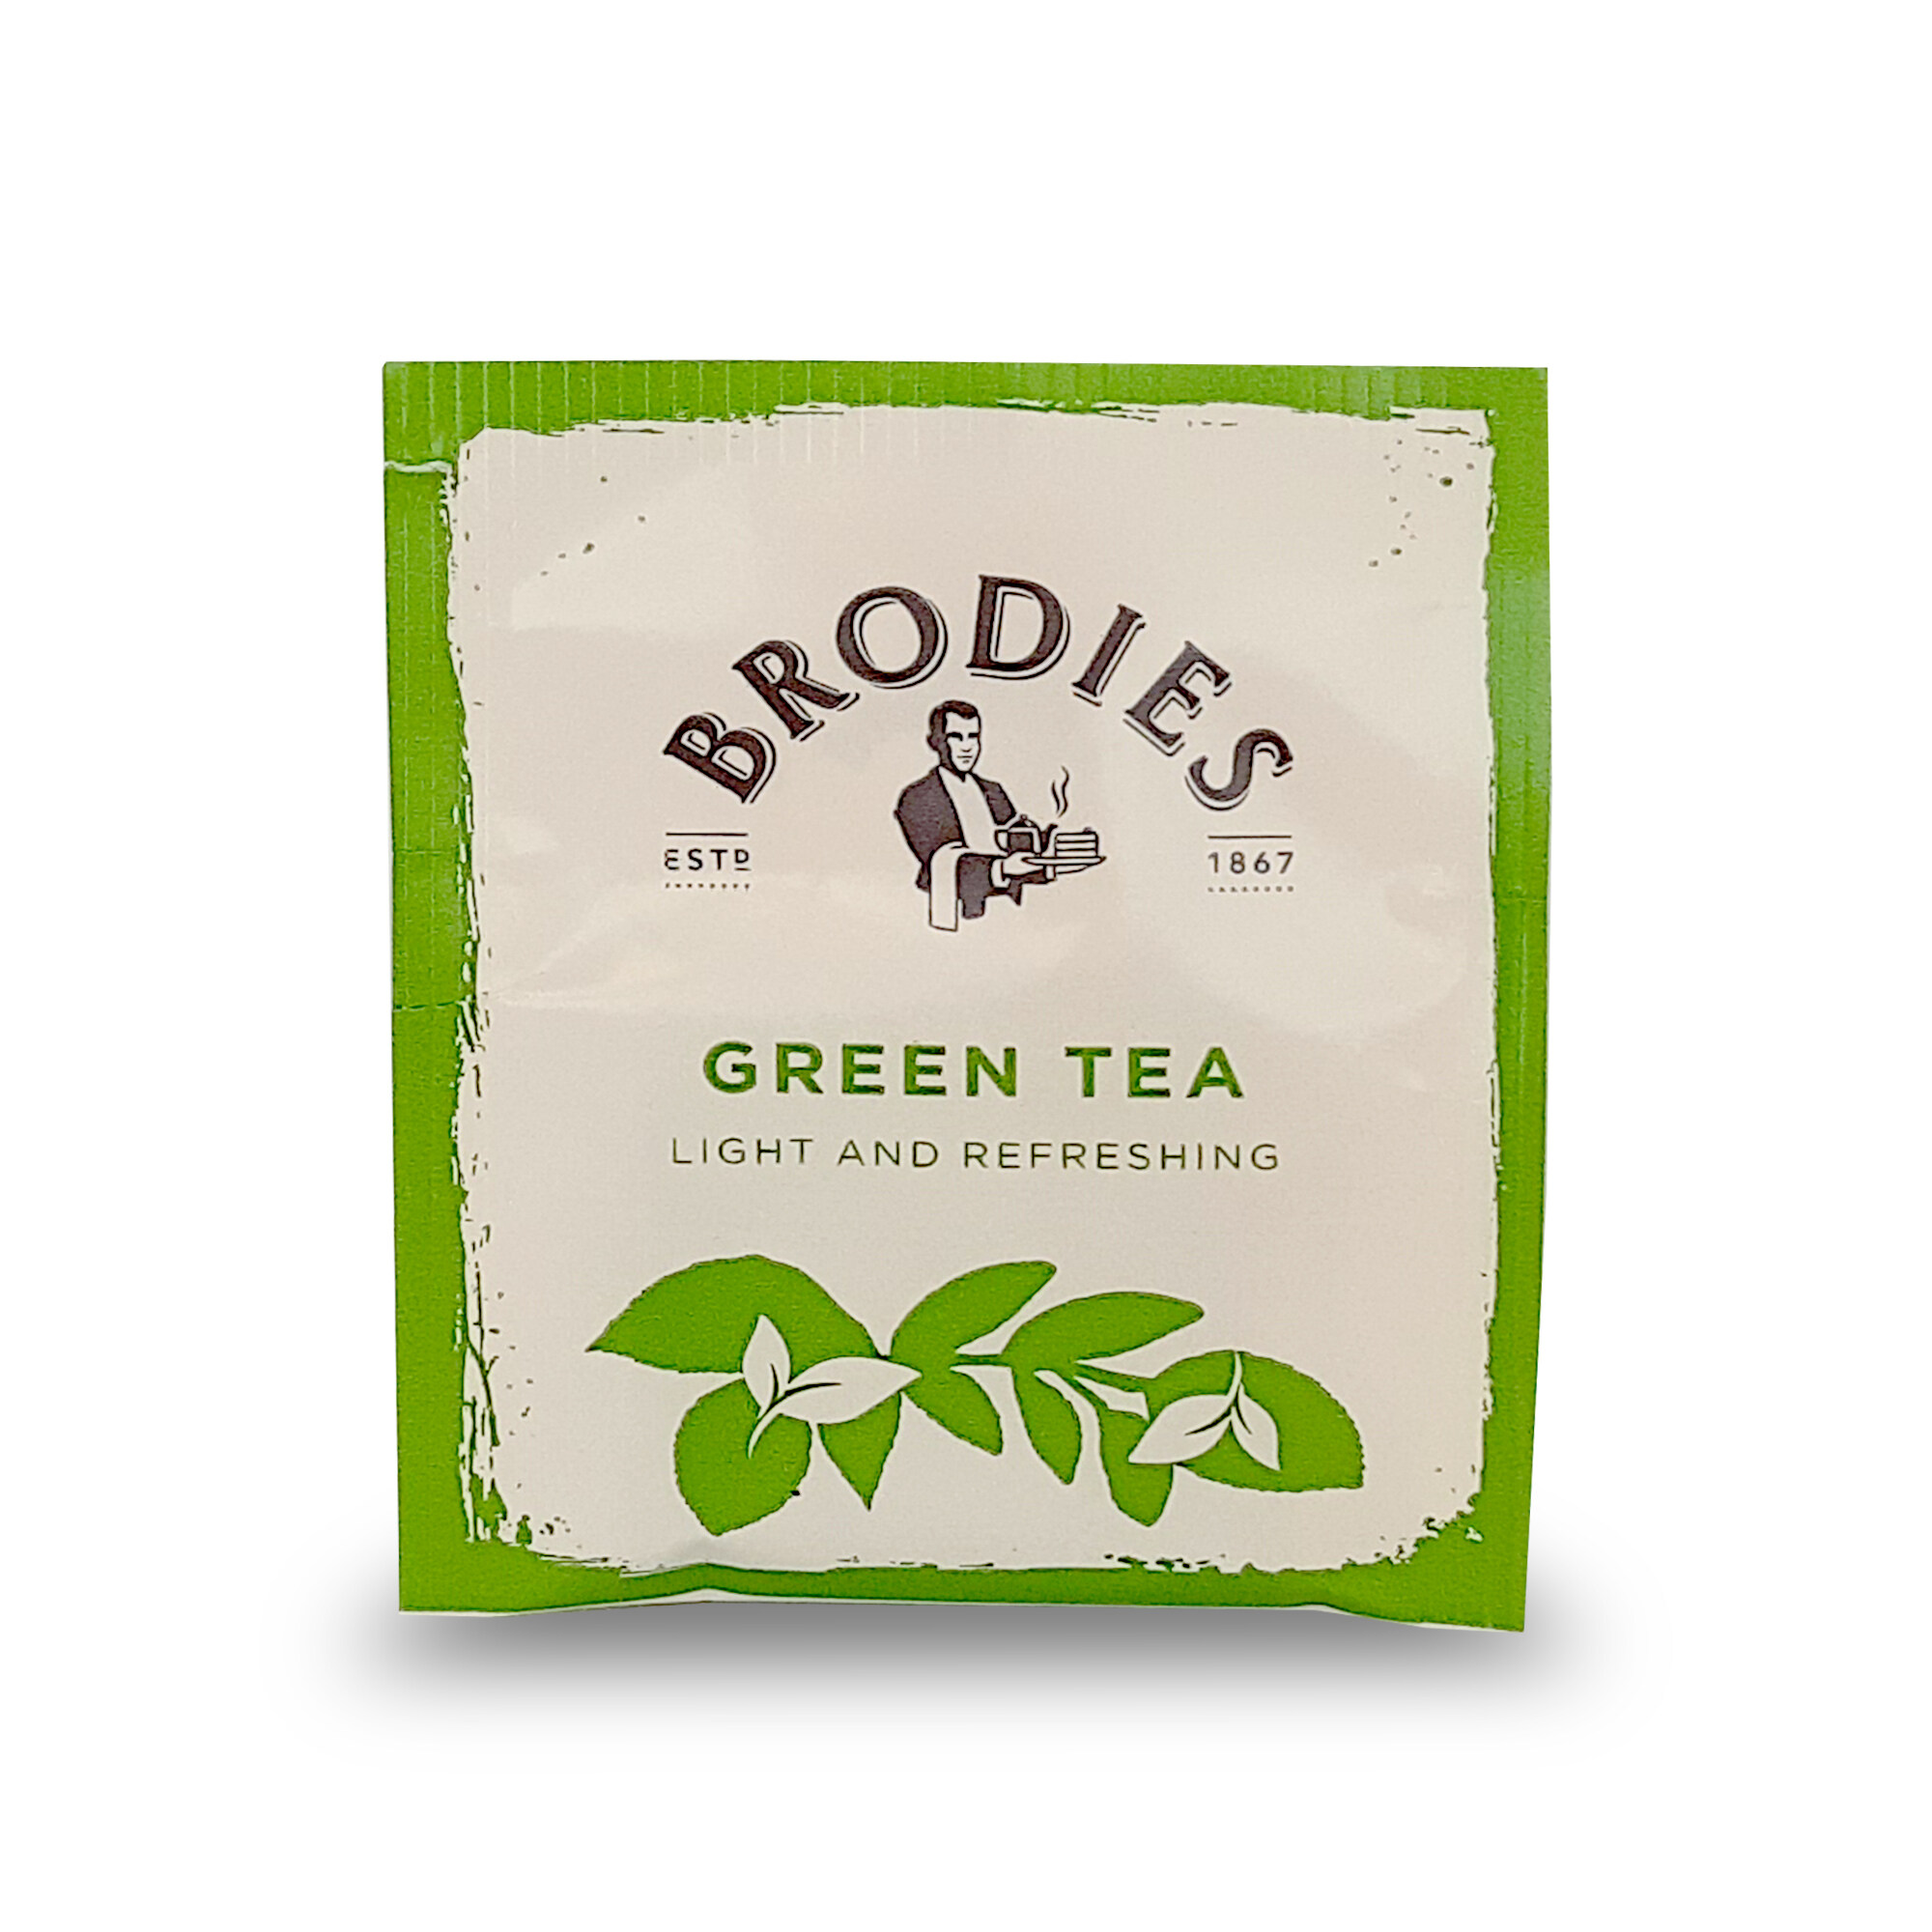 Brodies Green Tea 2g X 20's (Exp: Dec 2022)